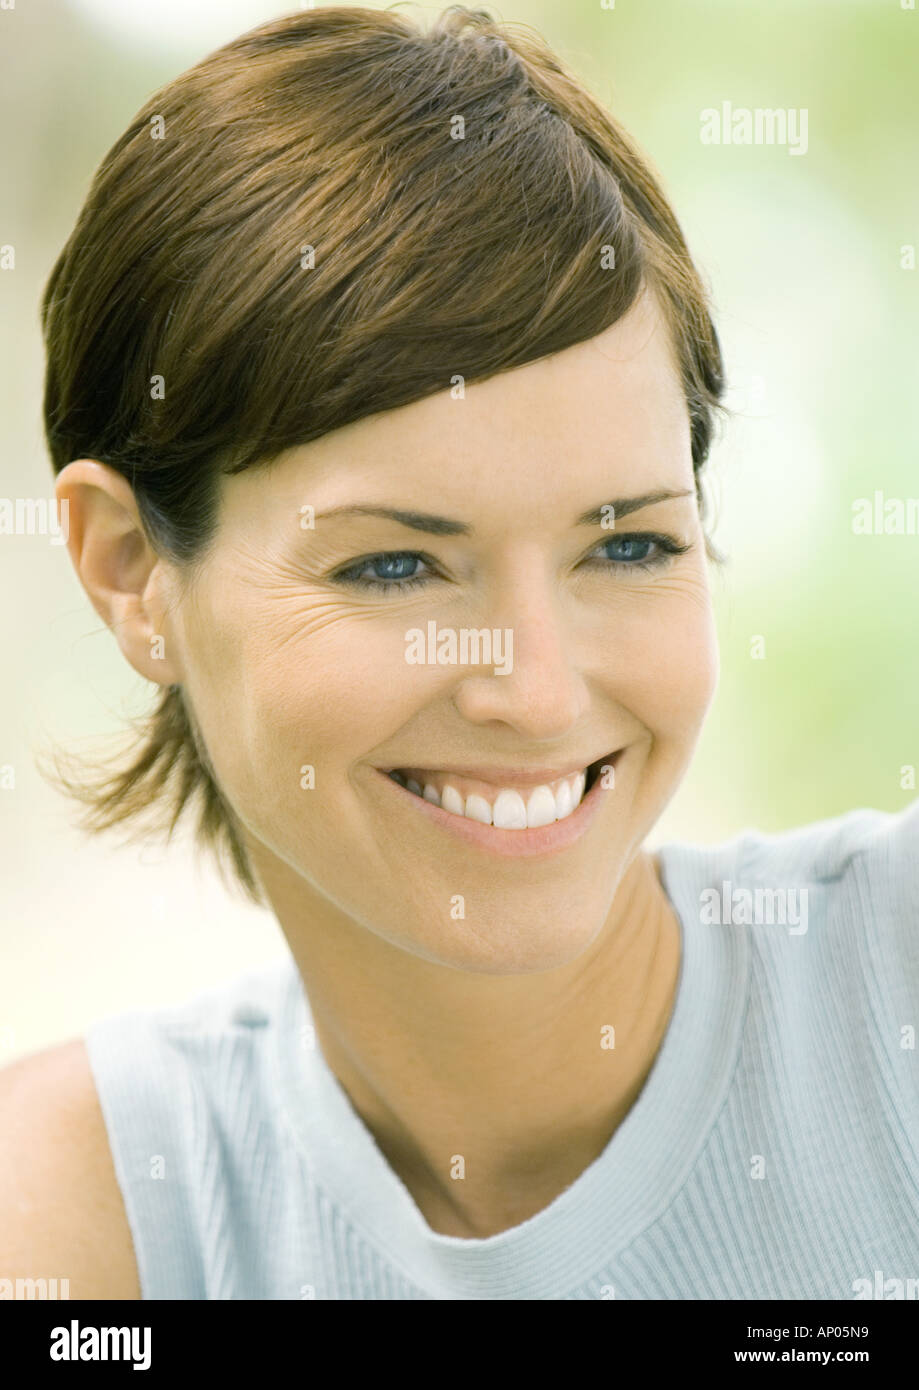 Woman smiling, portrait Stock Photo